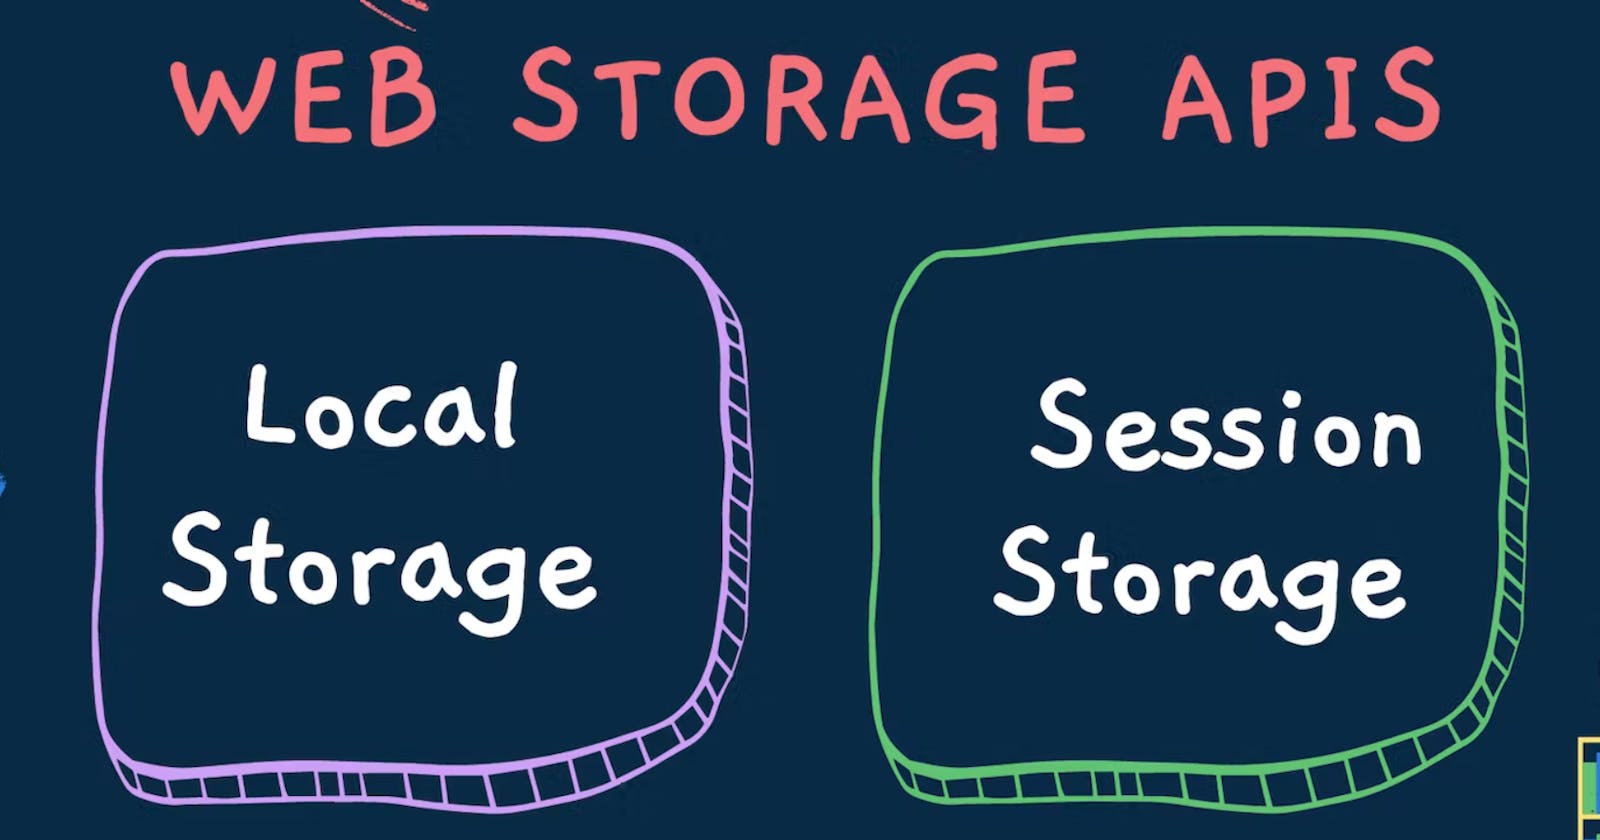 Web Storage API - Local and Session Storage